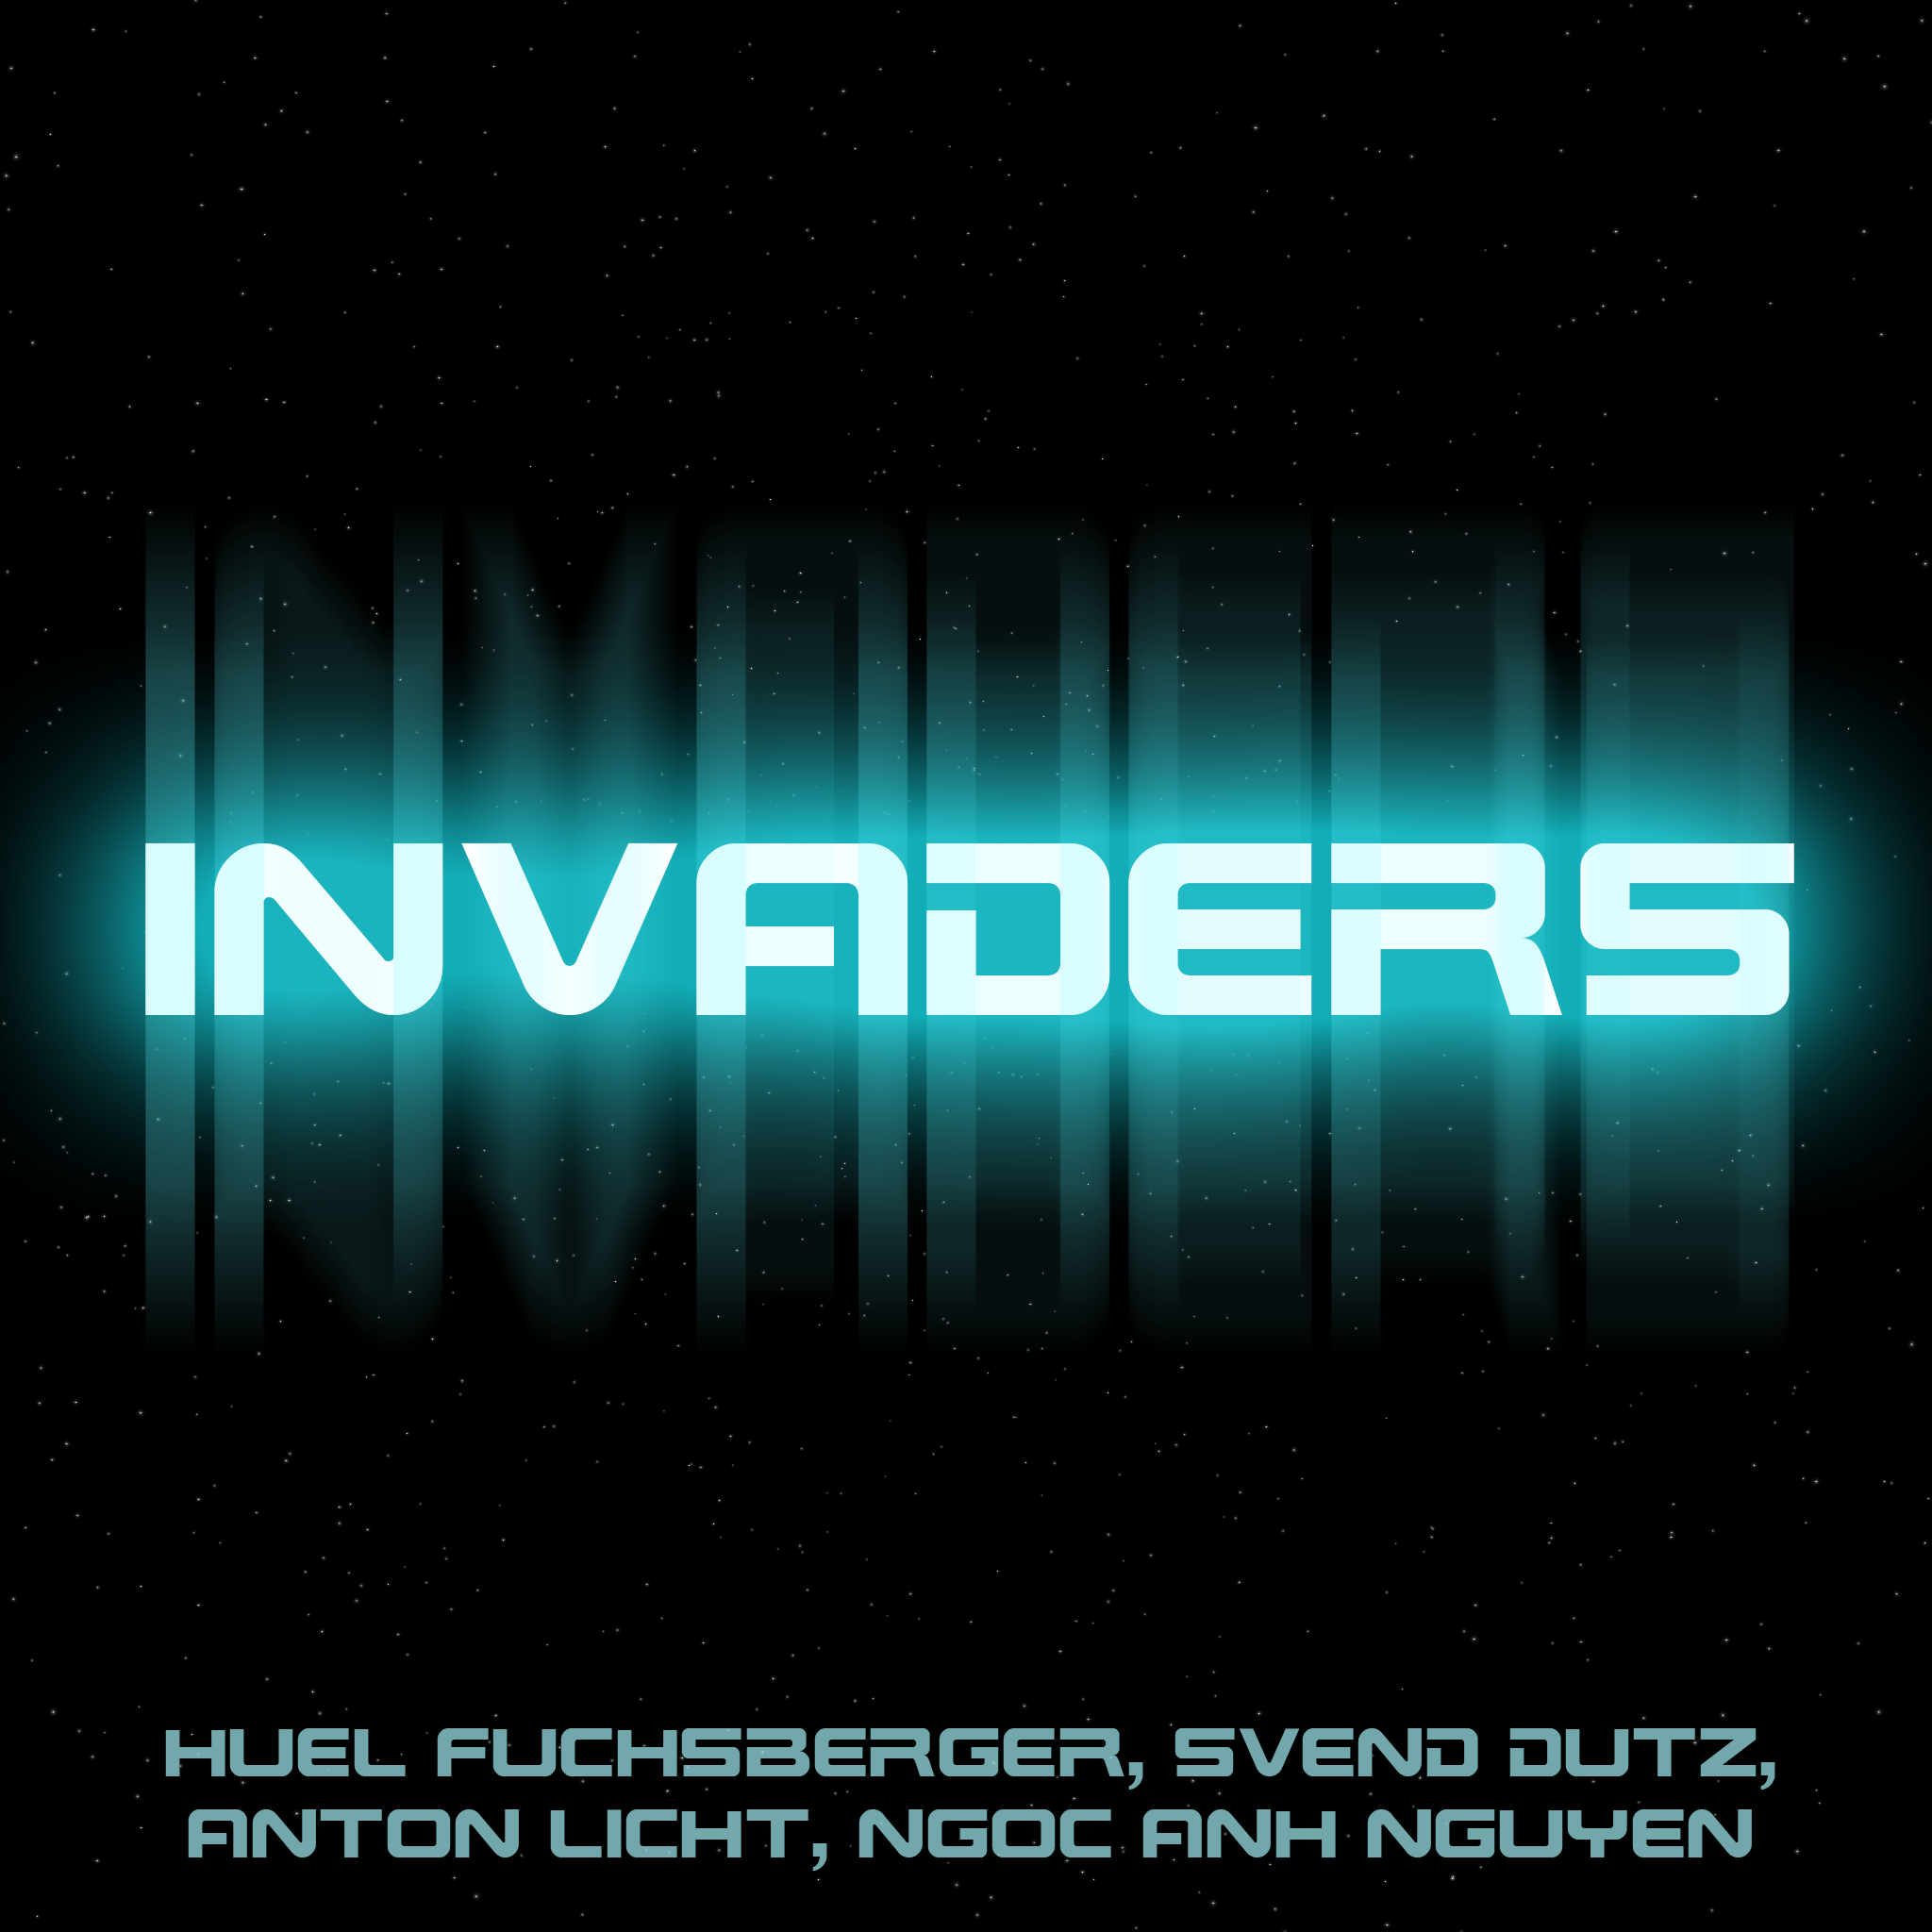 Invaders (Aztecfox) Mac OS